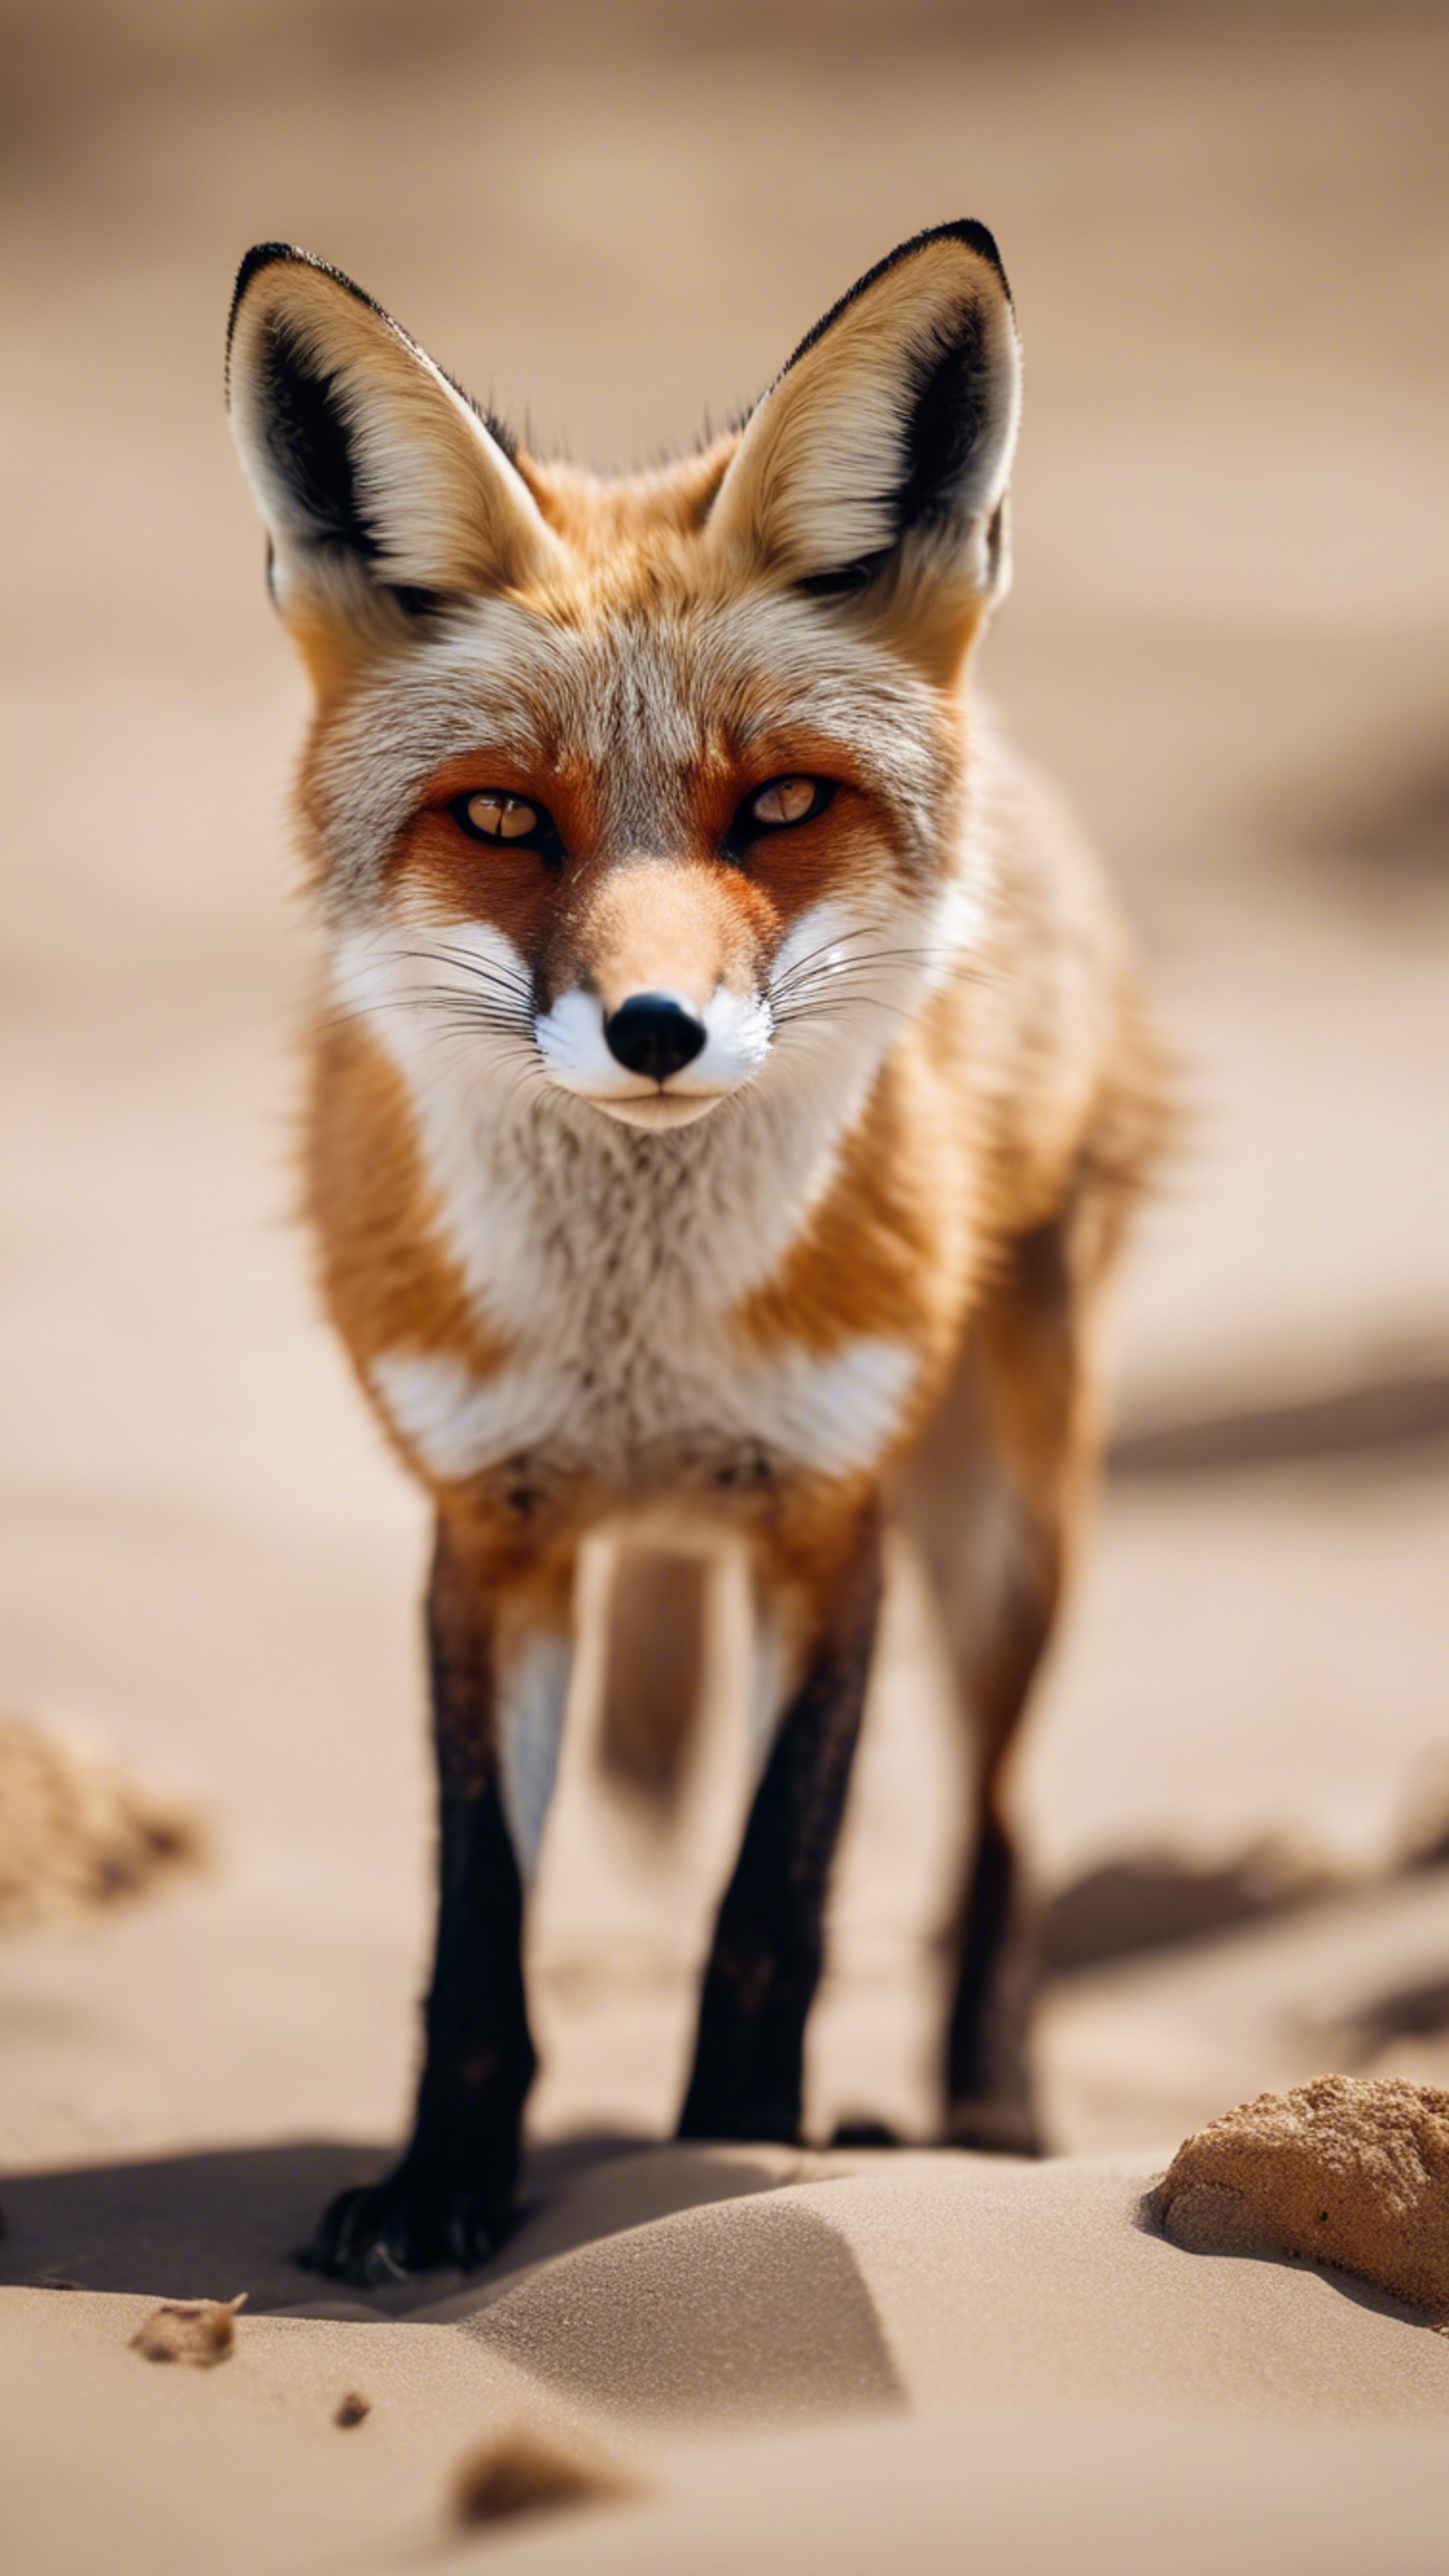 A lone desert fox in its natural habitat, roaming around amid the sand dunes. Taustakuva[17bb71b2b2bc40f18dca]